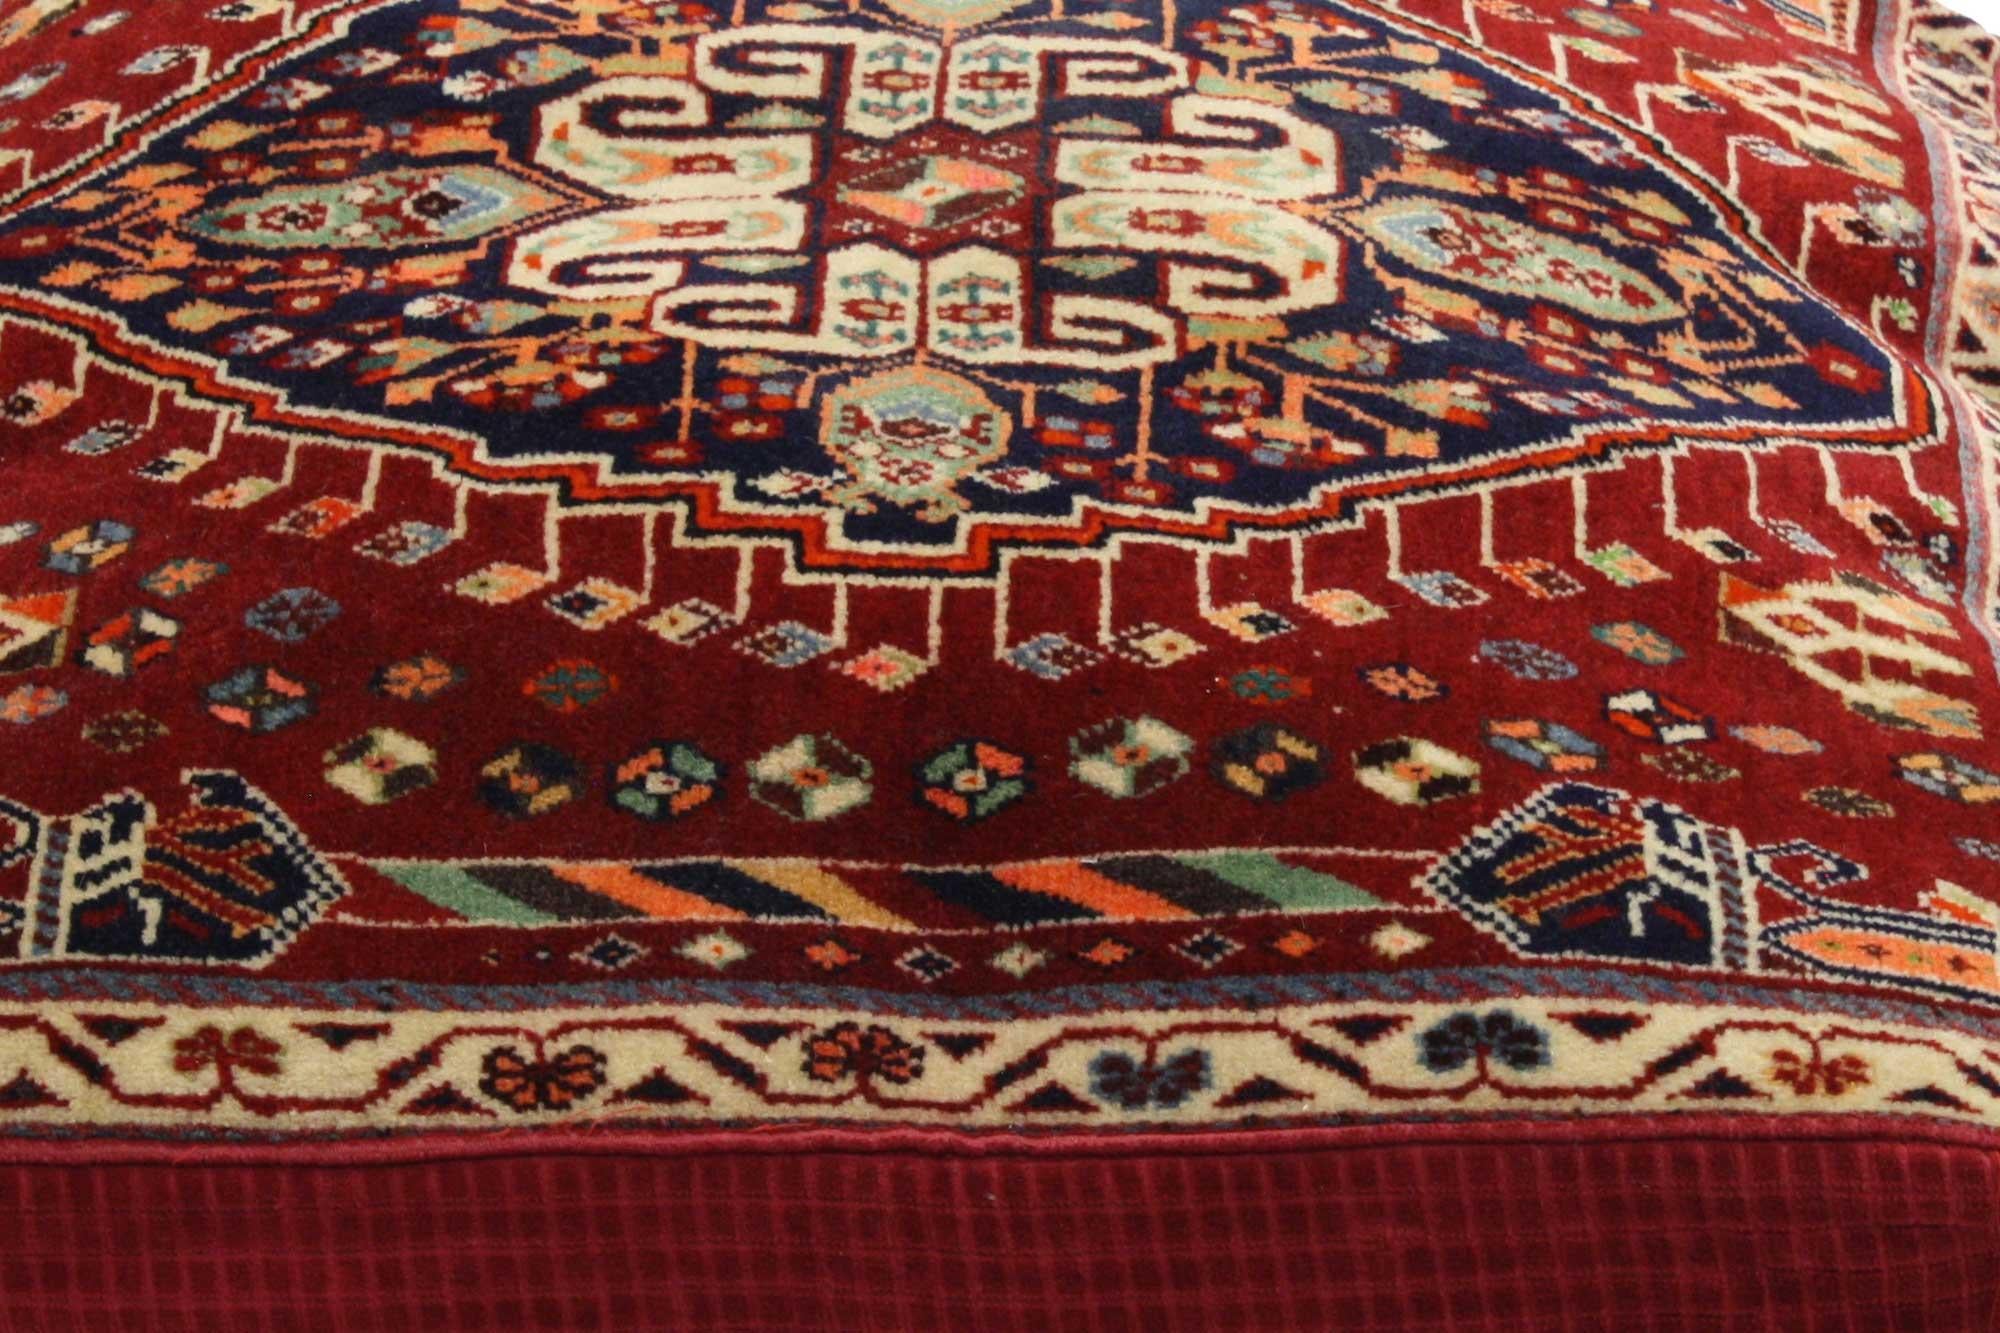 20th Century Pair of Antique Persian Floor Cushions Poshti Pillows For Sale